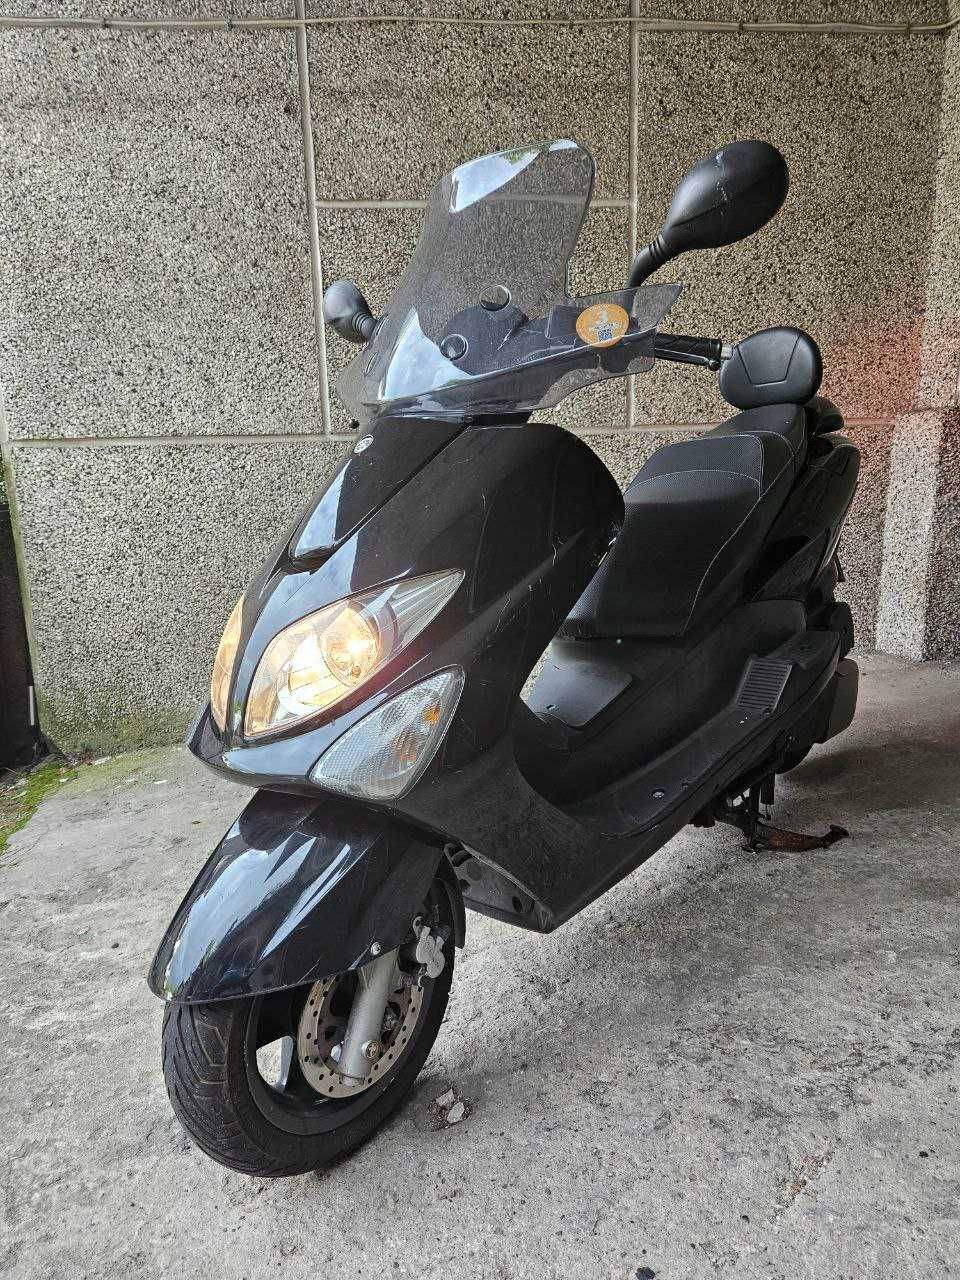 Skuter Yamaha Majesty 125 cc